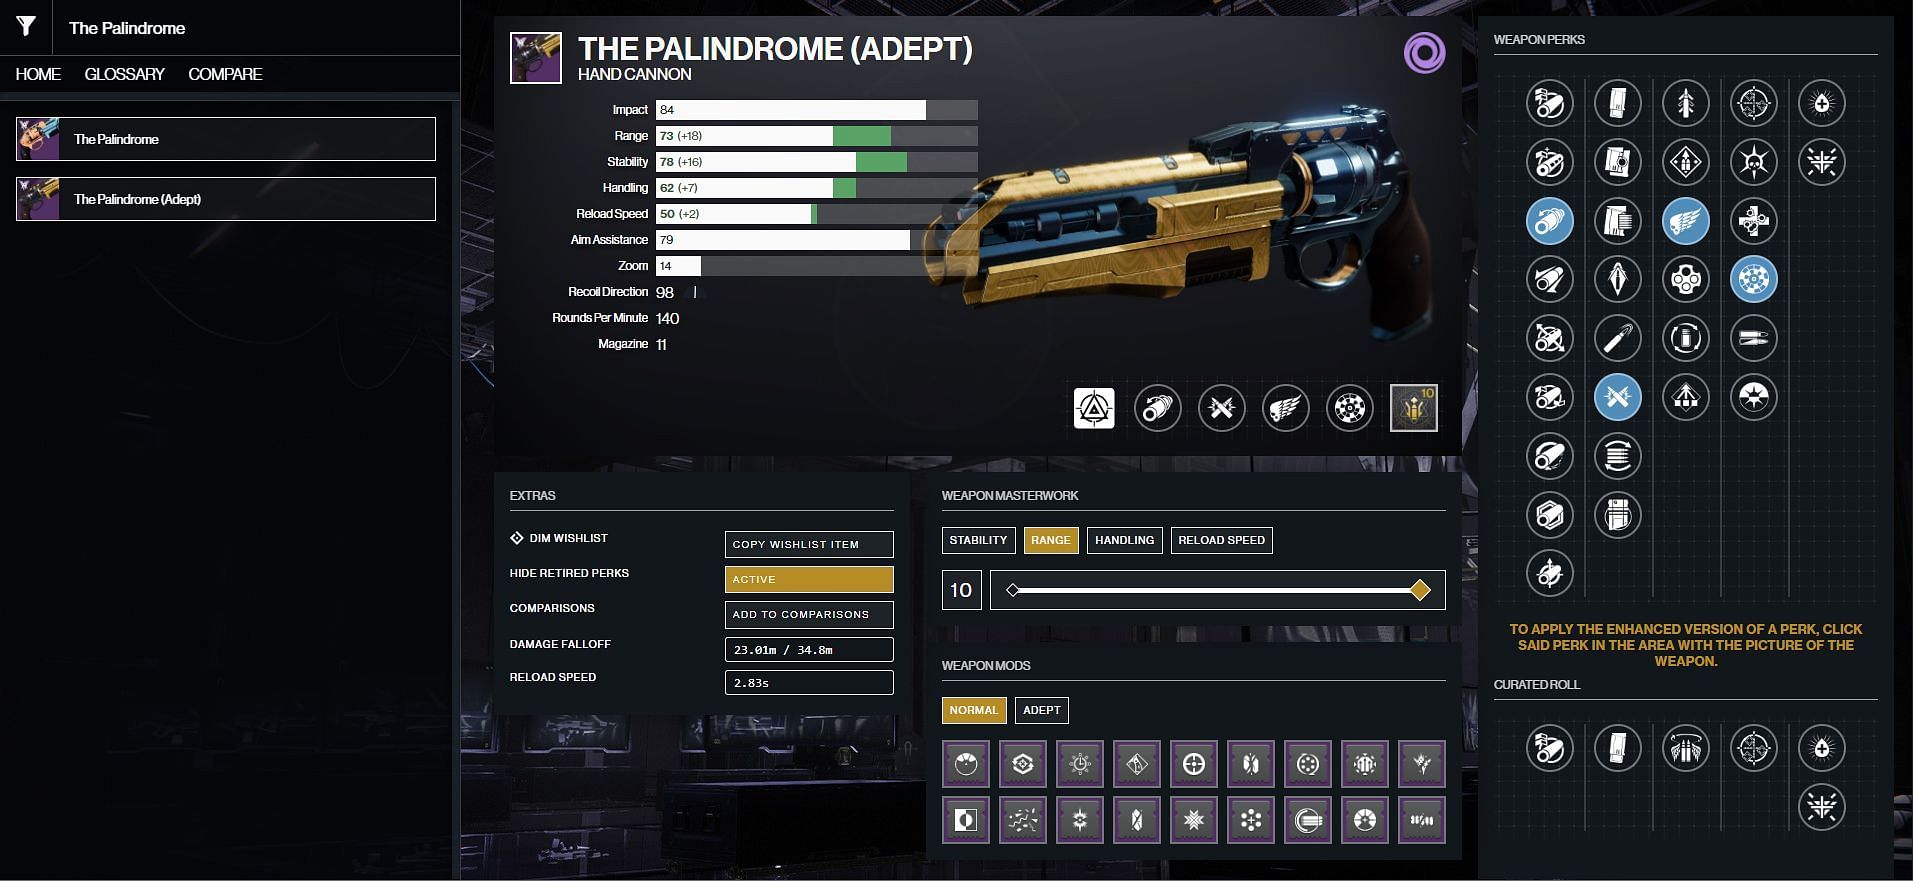 The Palindrome Hand Cannon PvP god roll (Image via Destiny 2 Gunsmith)